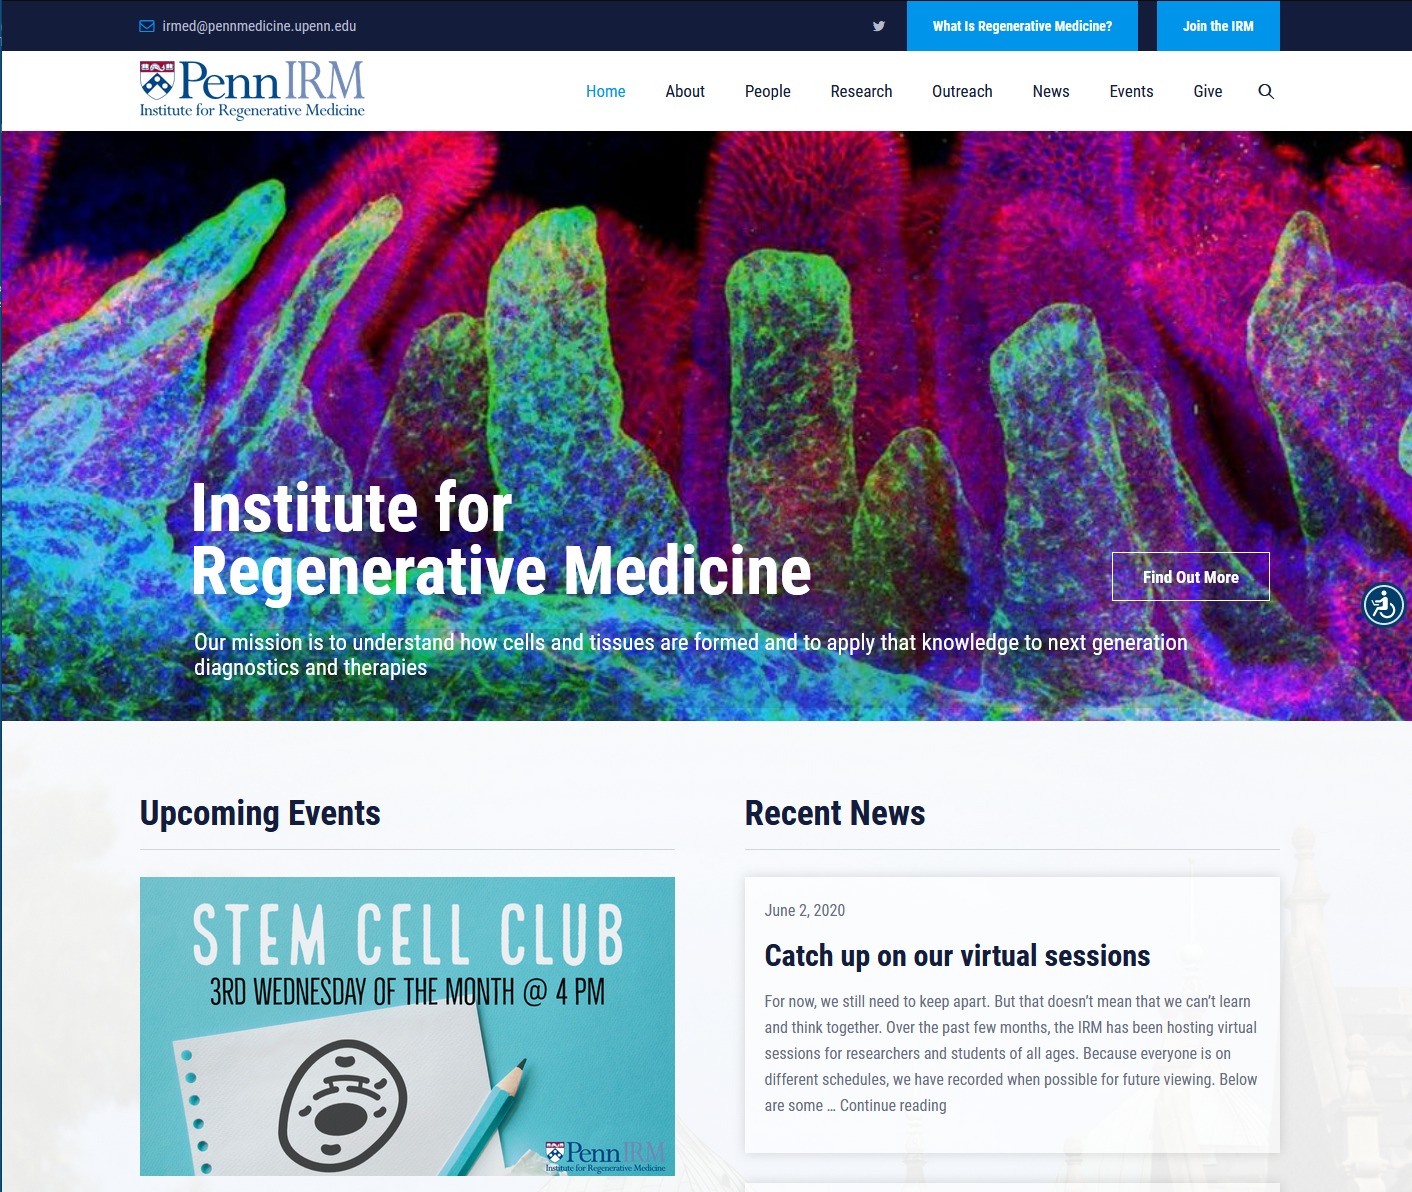 Upenn -The Institute for Regenerative Medicine